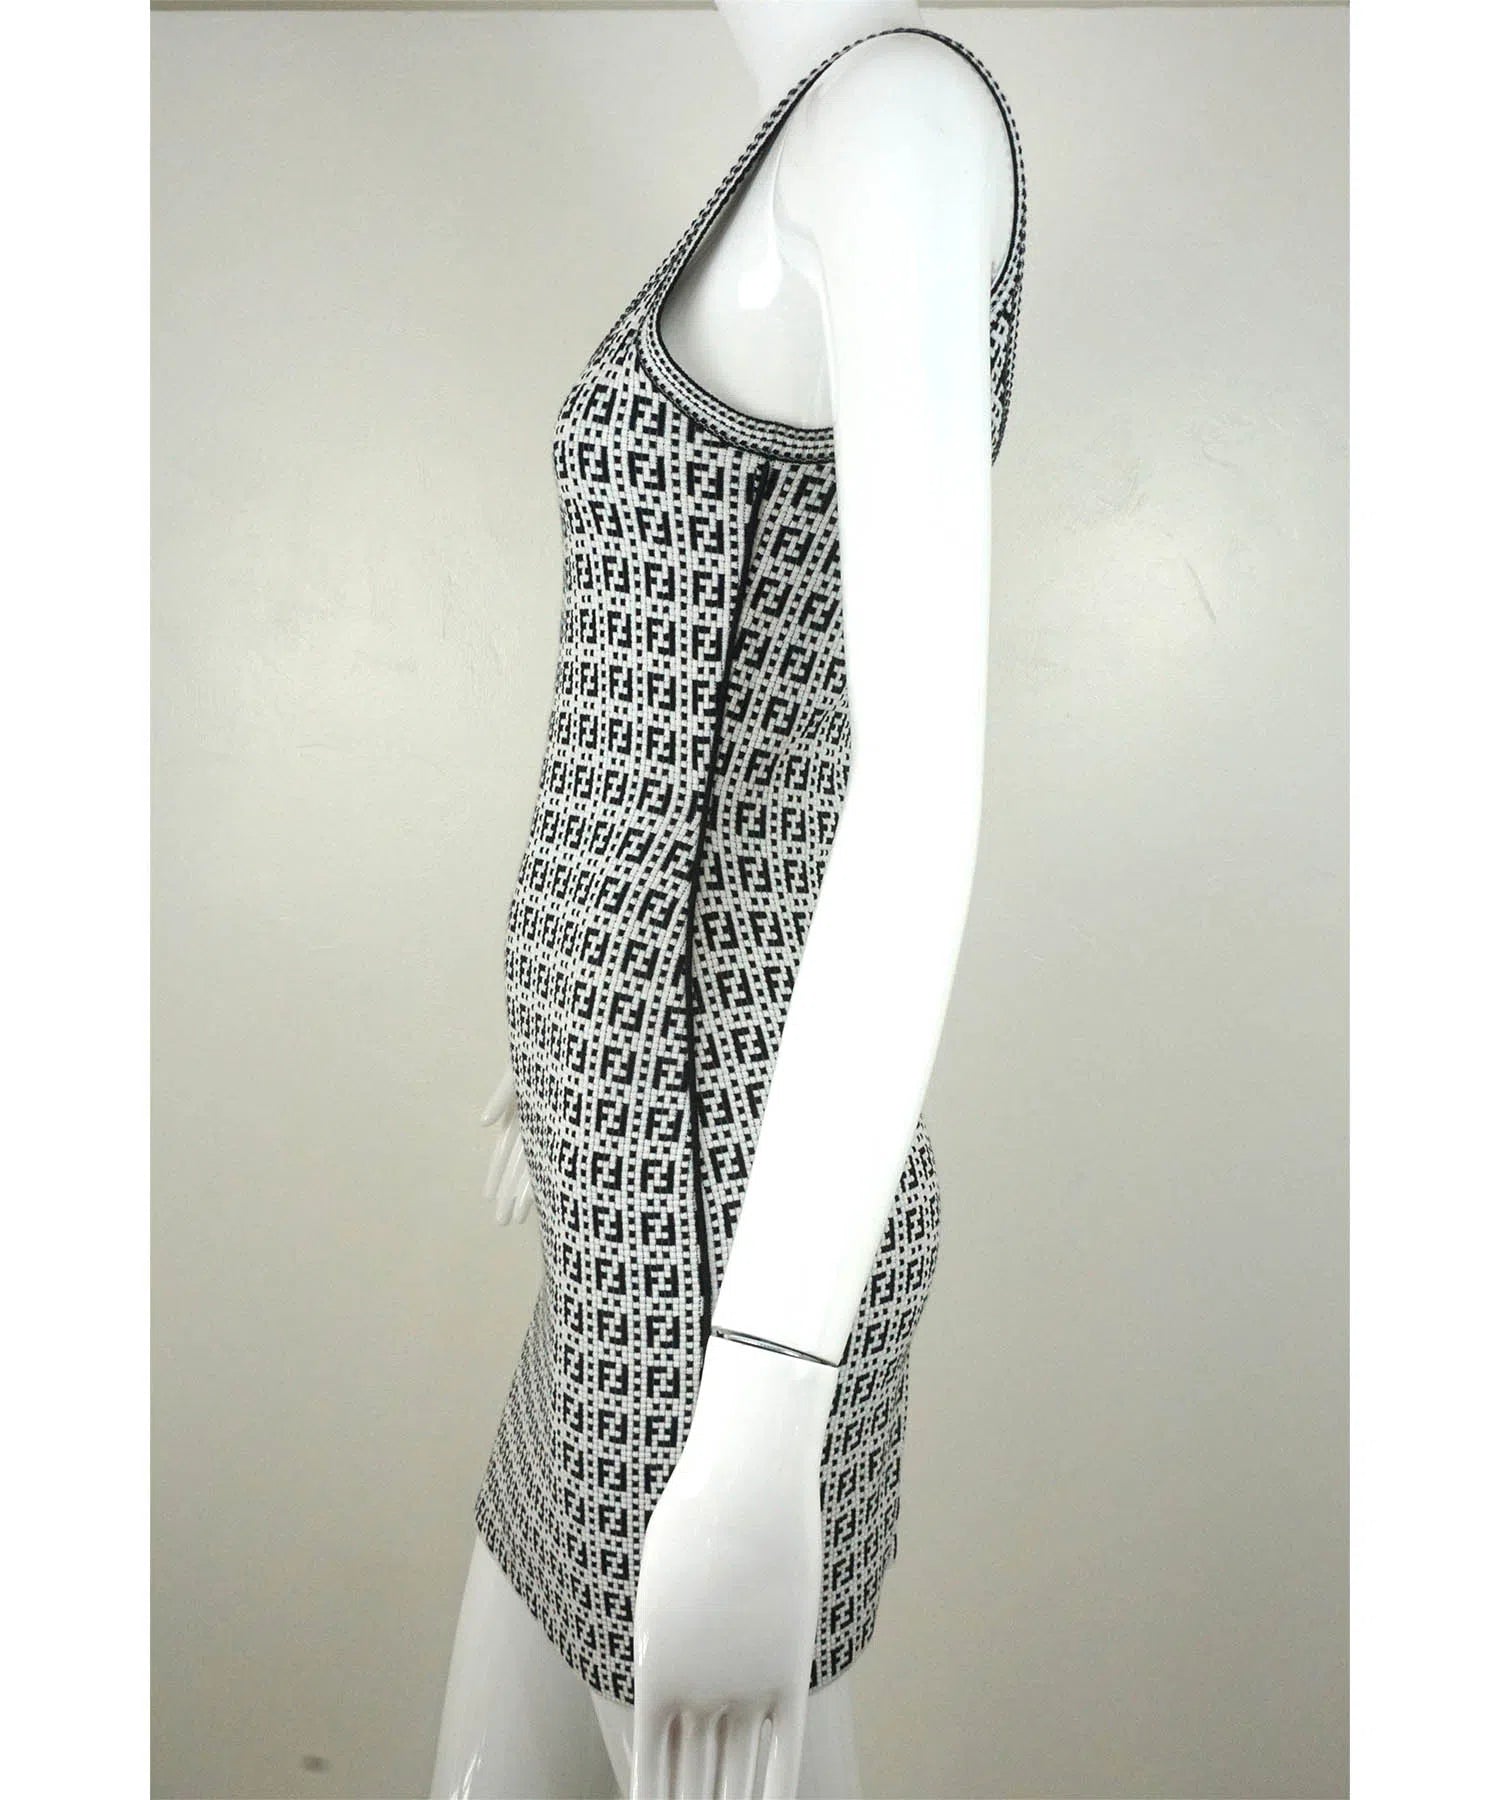 Fendi Zucca Print Stretch Sleeveless Dress - Foxy Couture Carmel